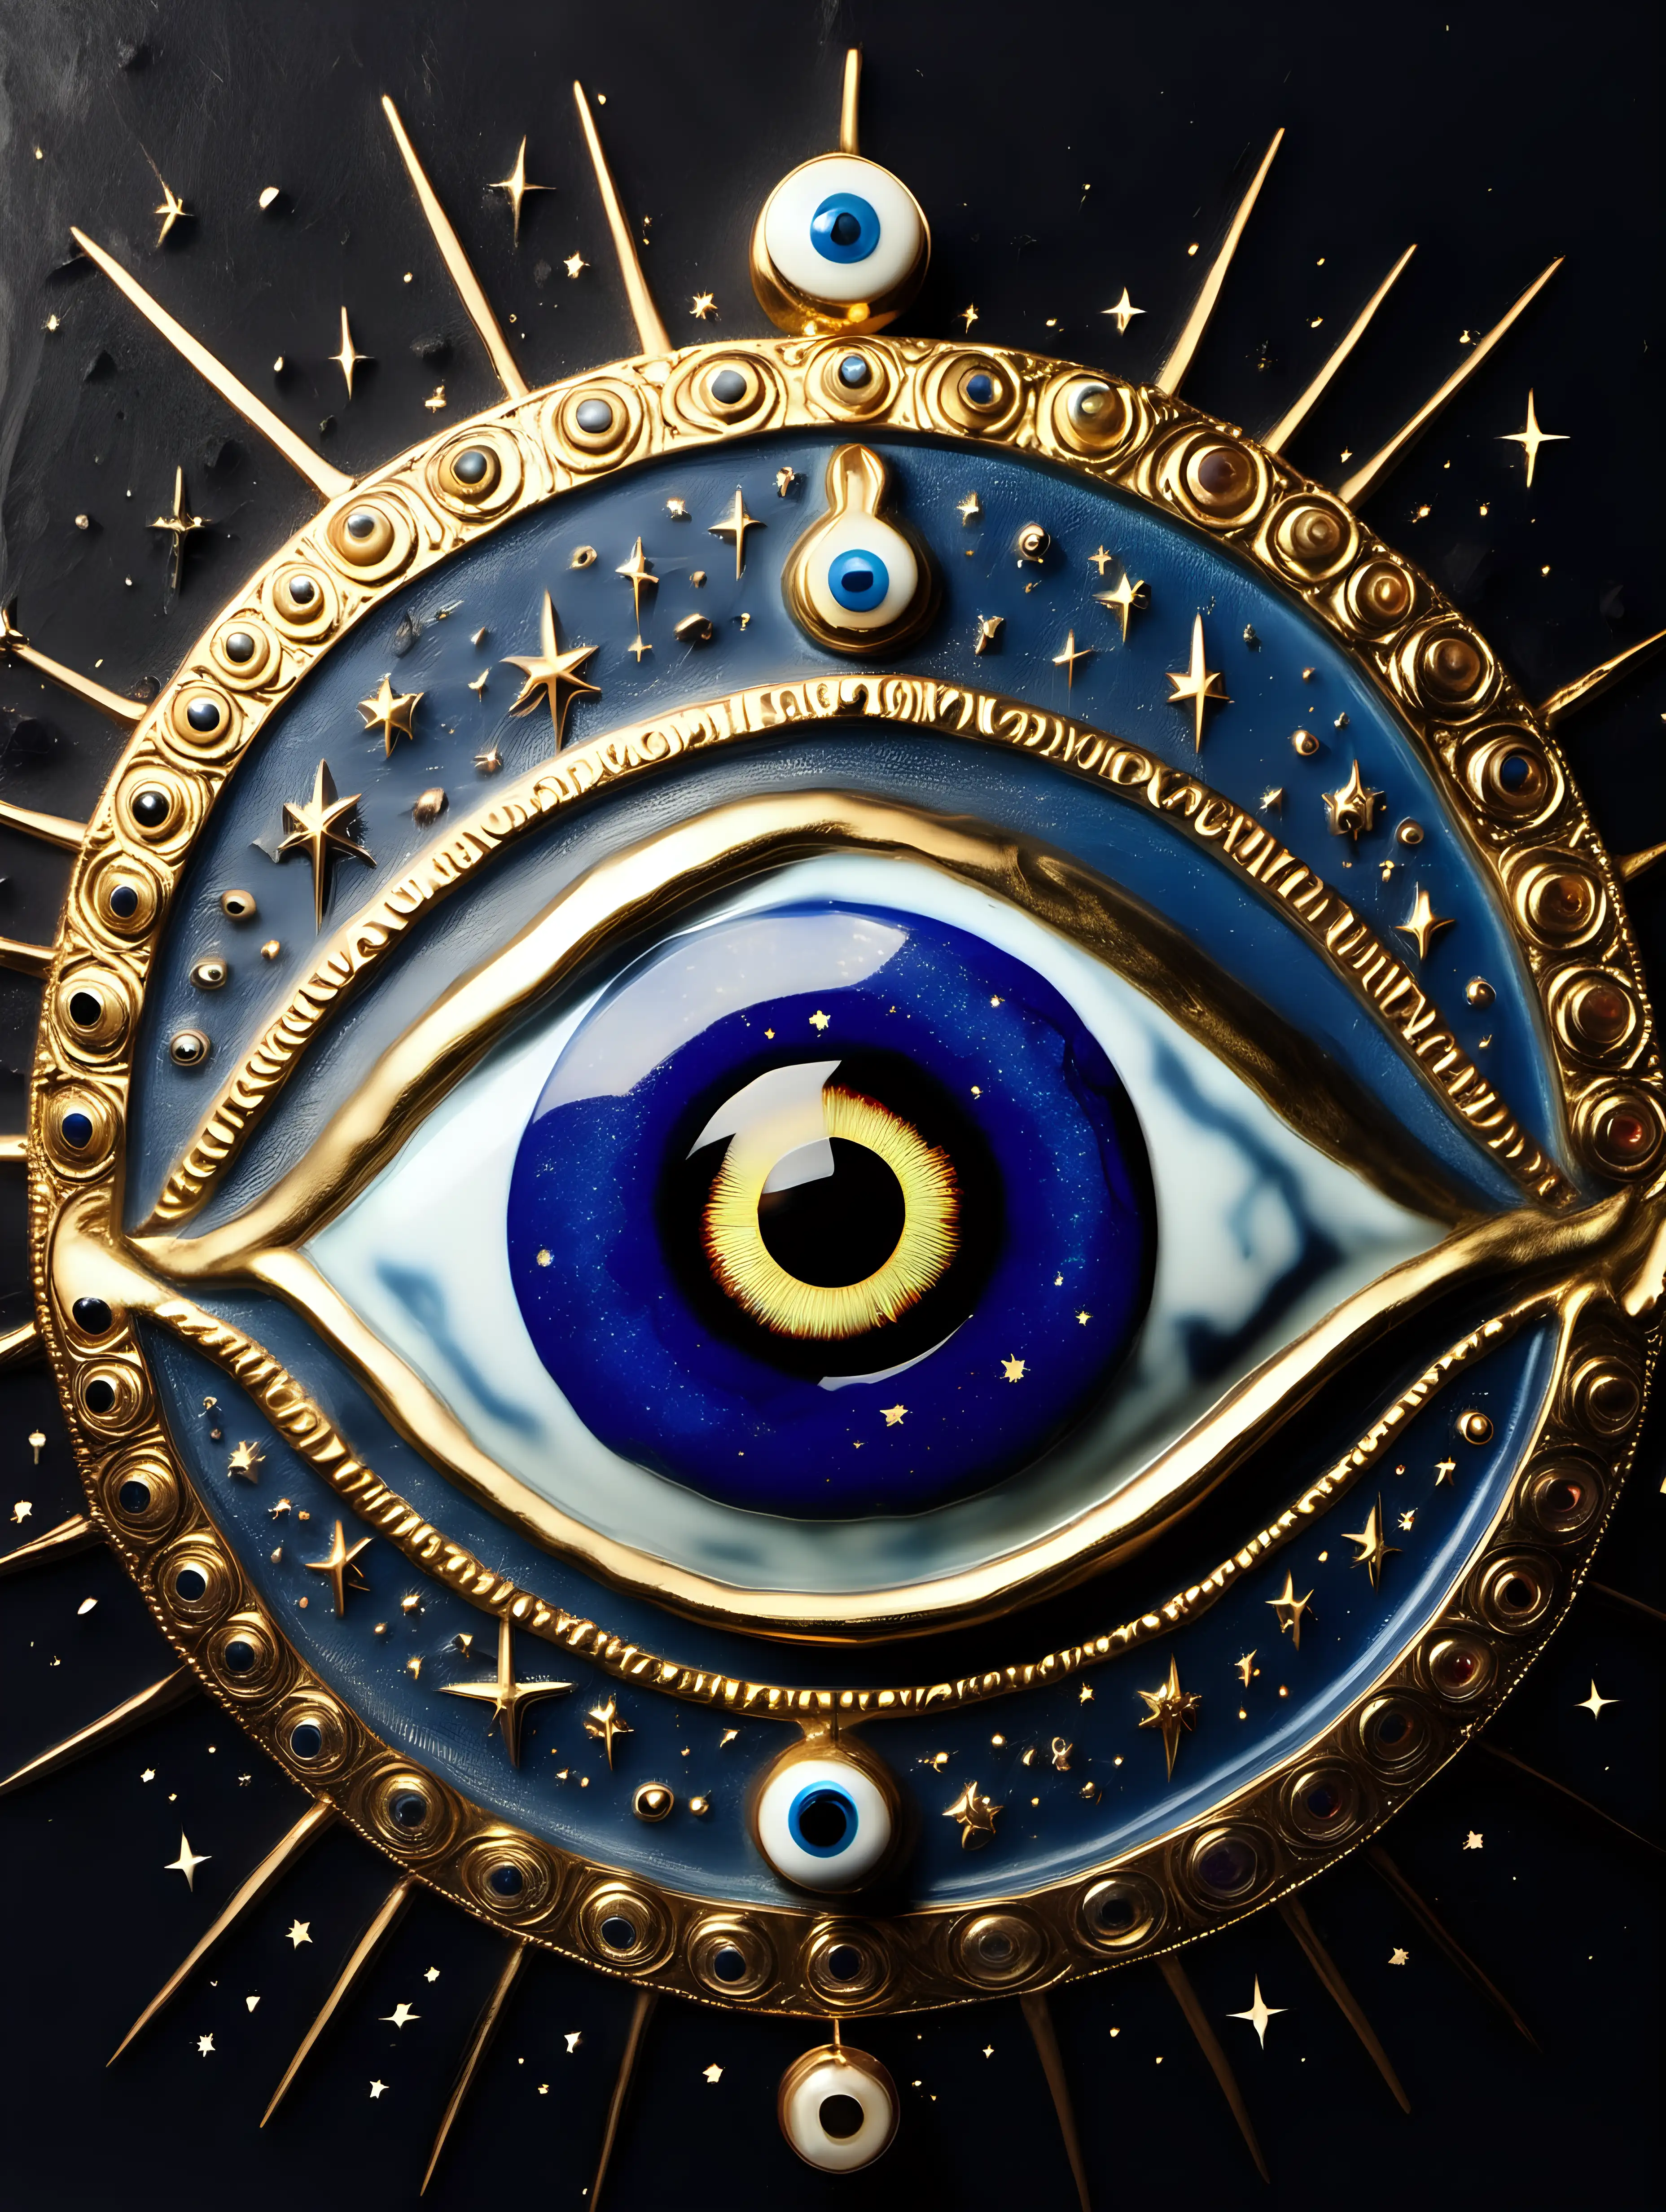 Celestial Eye of Evil Mystical and Malevolent Cosmic Gaze